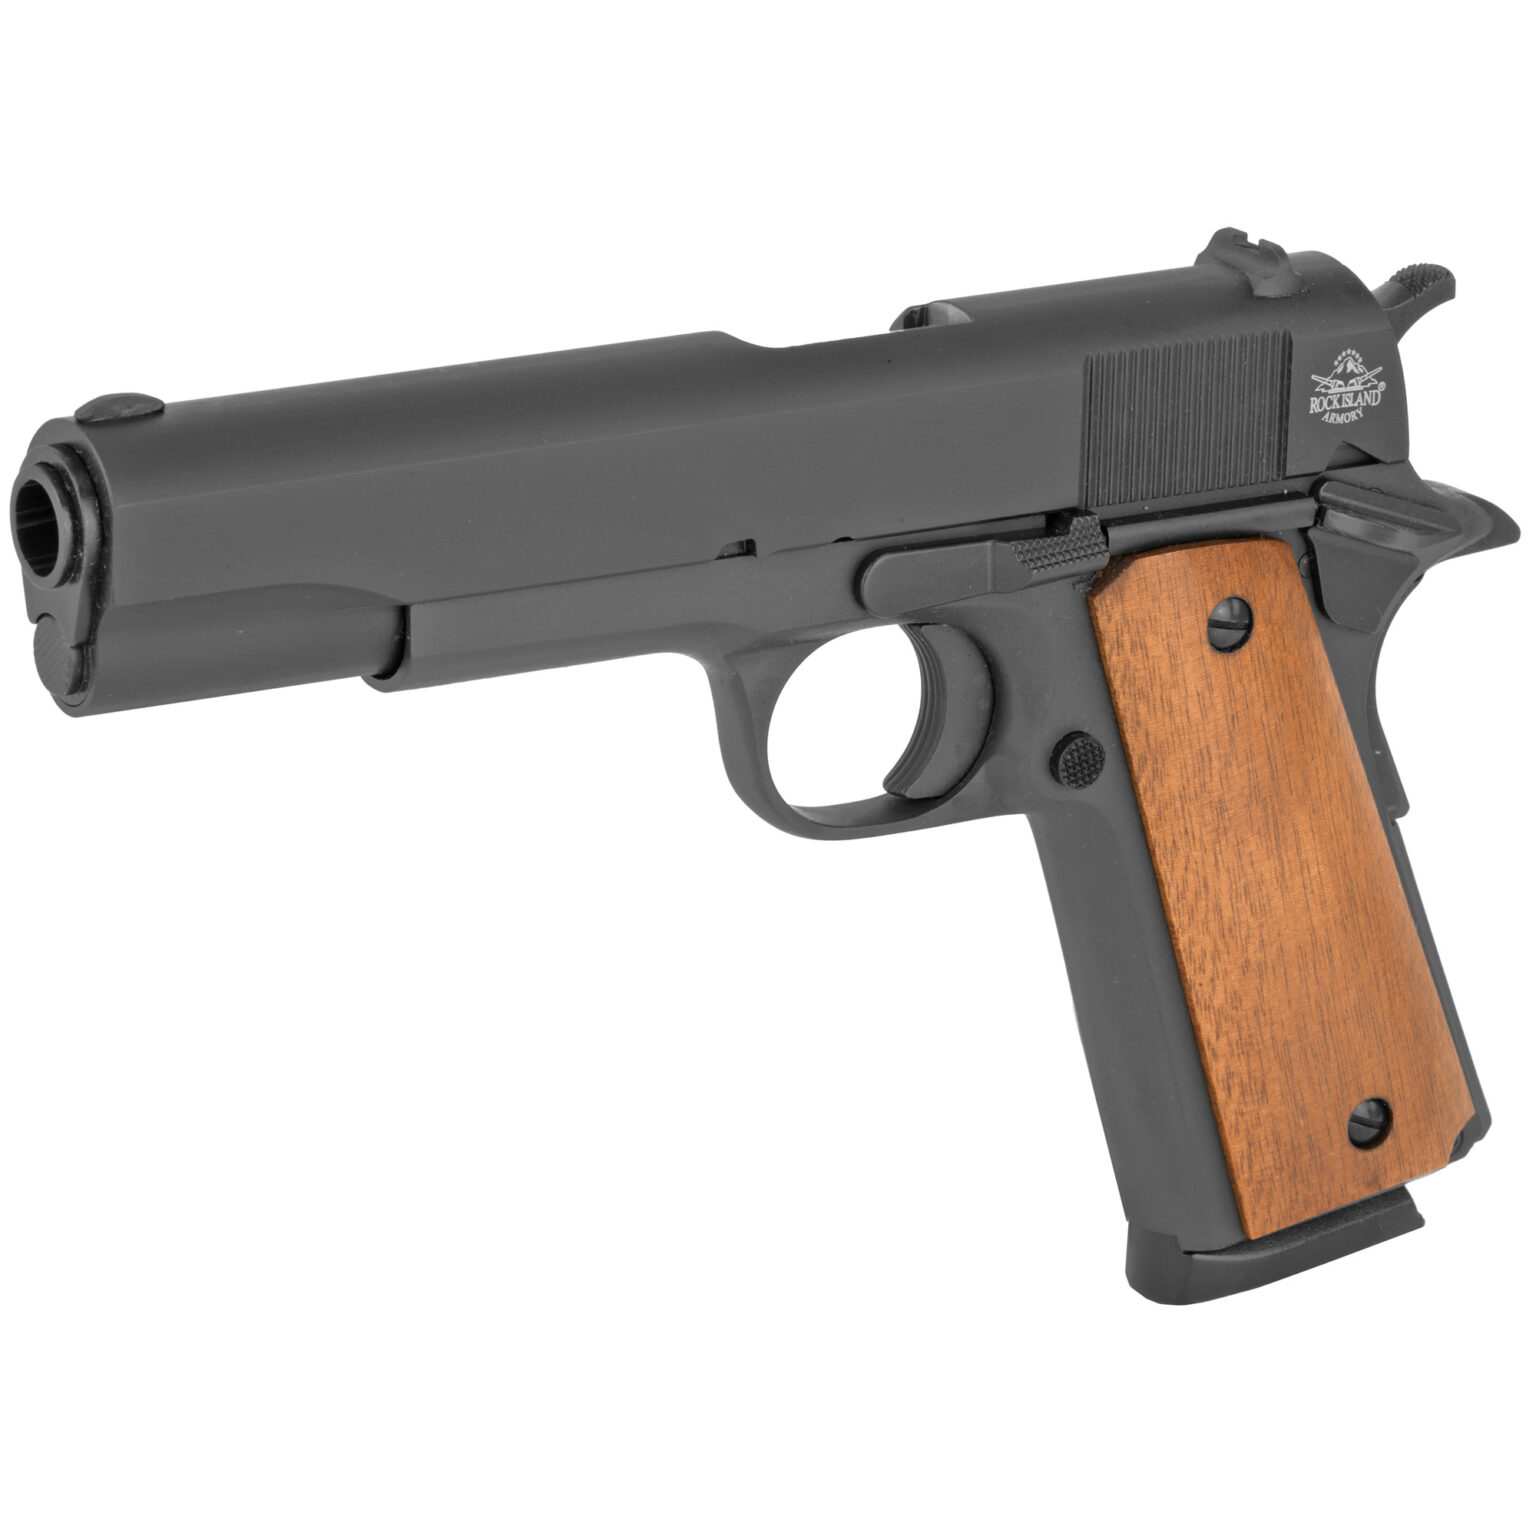 Armscor Rock Island Armory M1911 A1 Gi 1911 45acp Pistol Black Parkerized Finish Wood Grips 5803